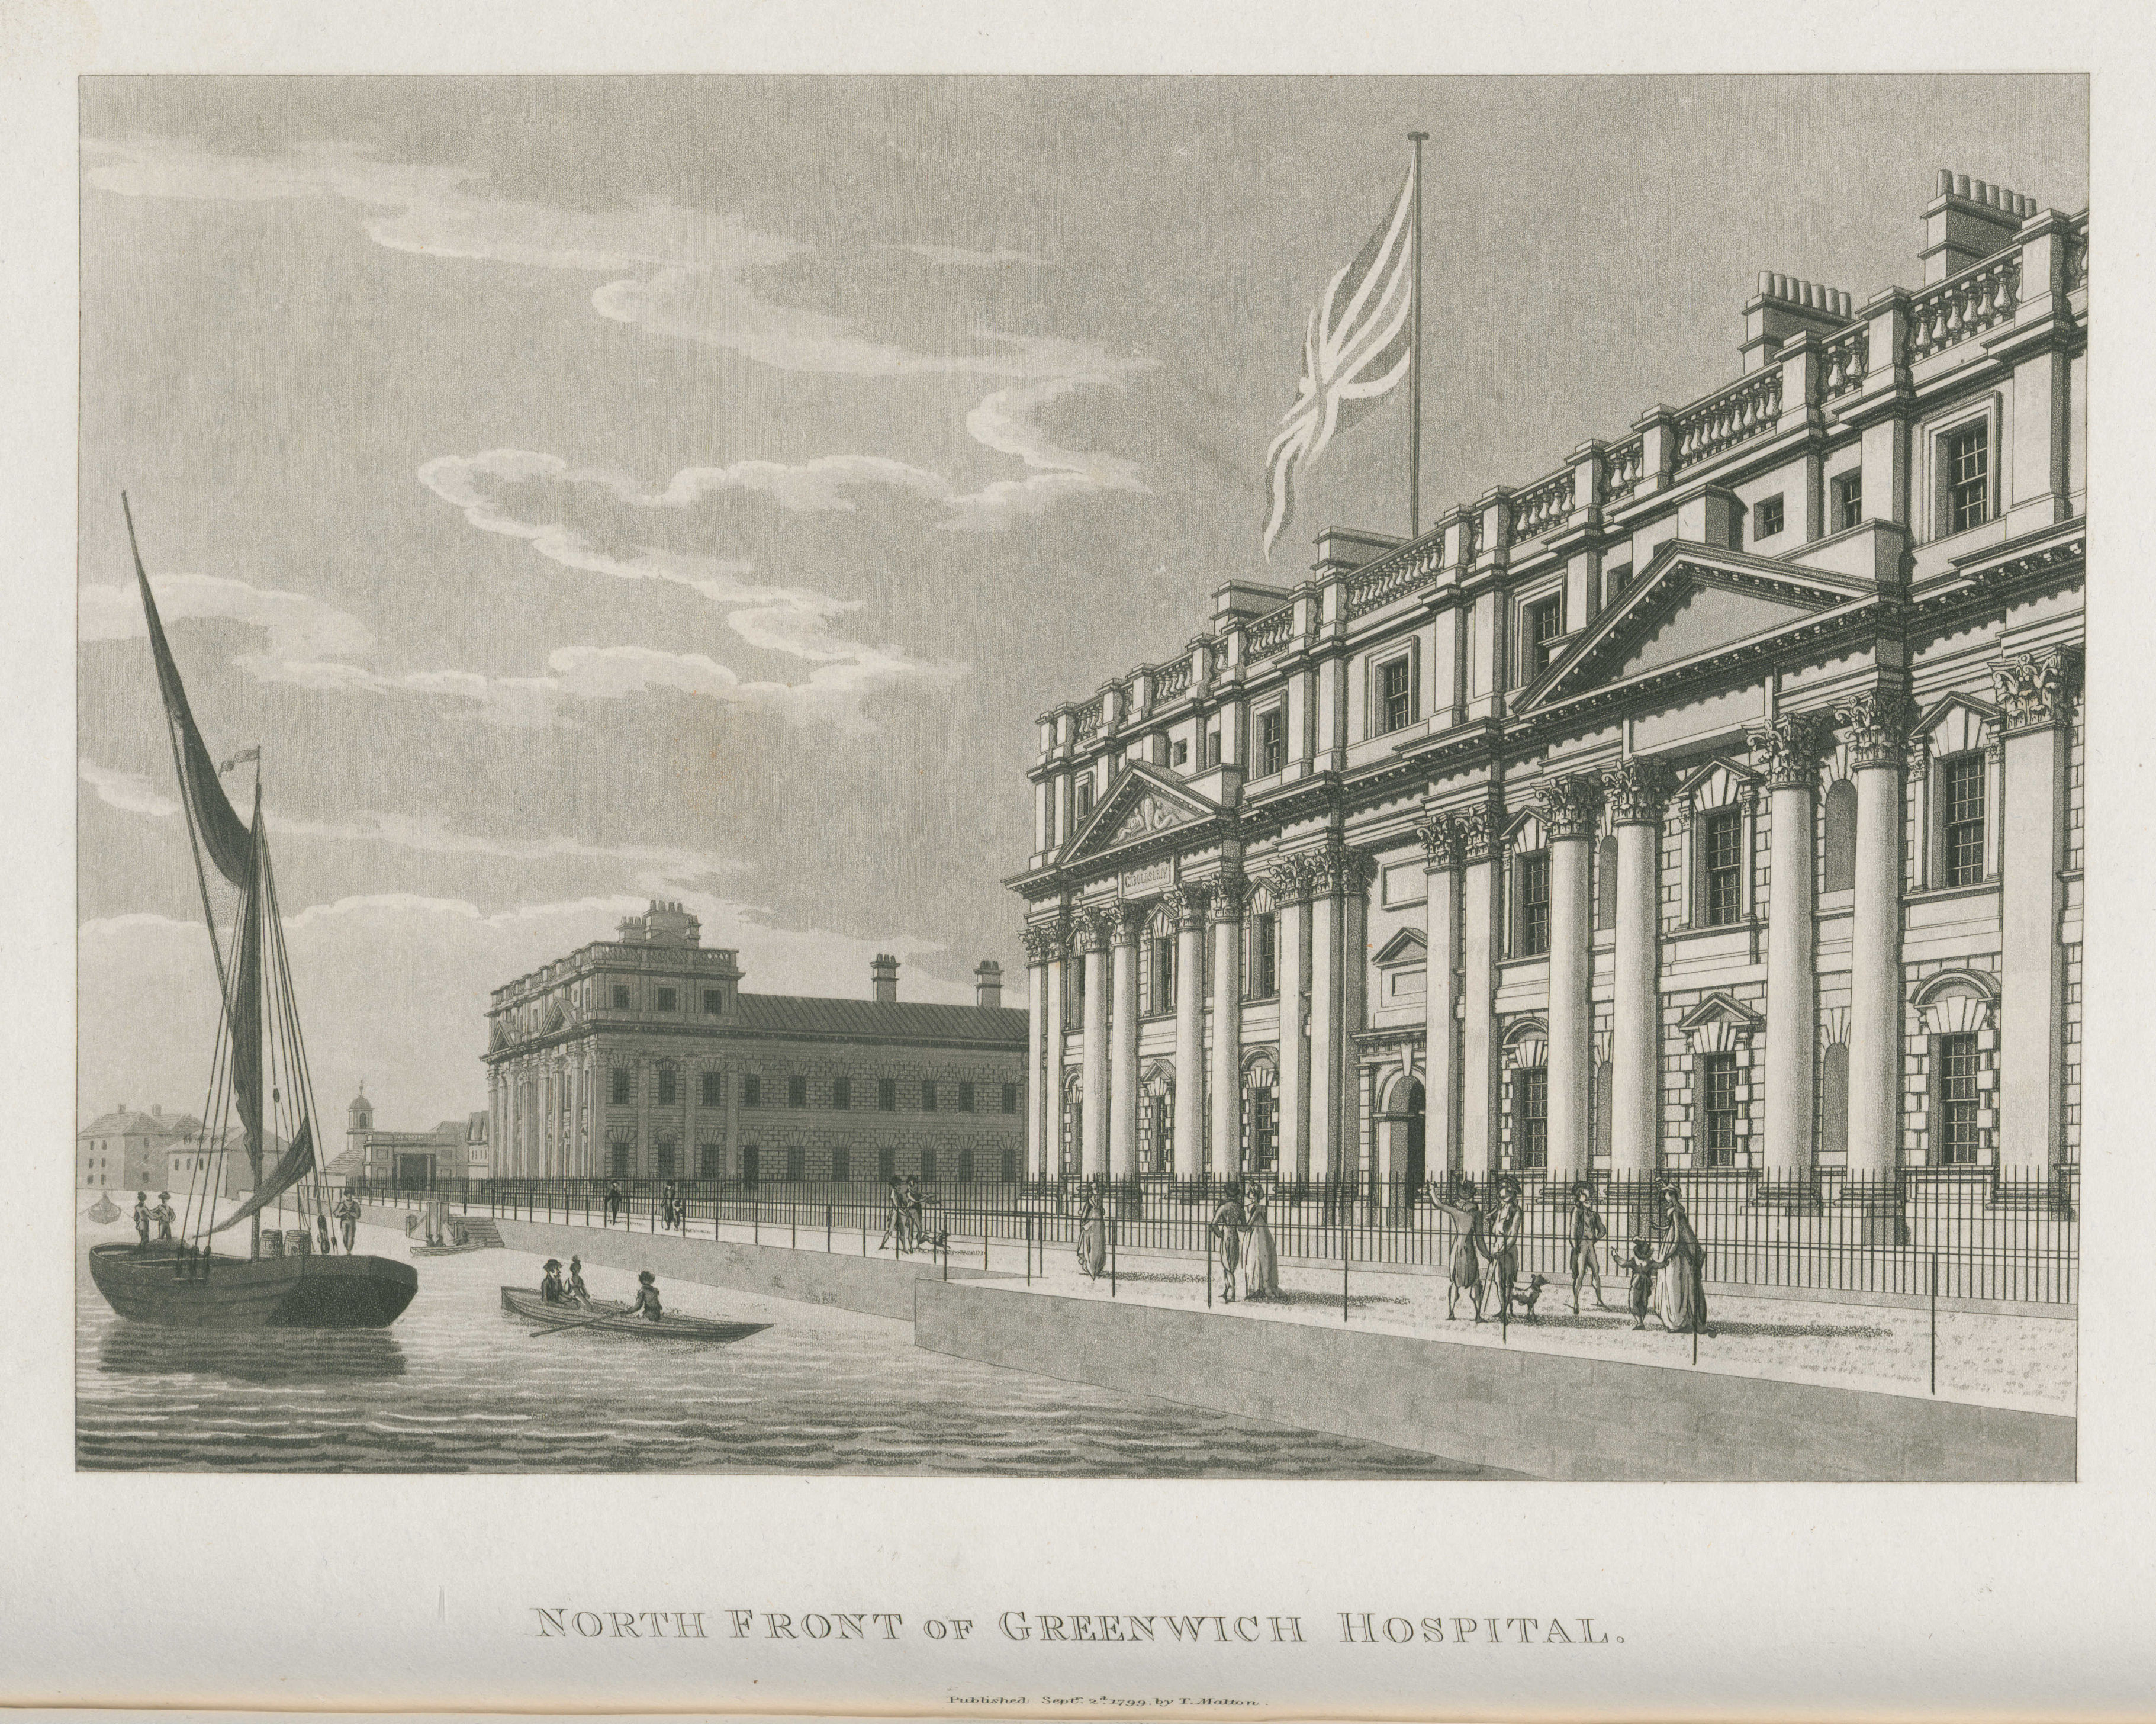 079 - Malton - North Front of Greenwich Hospital